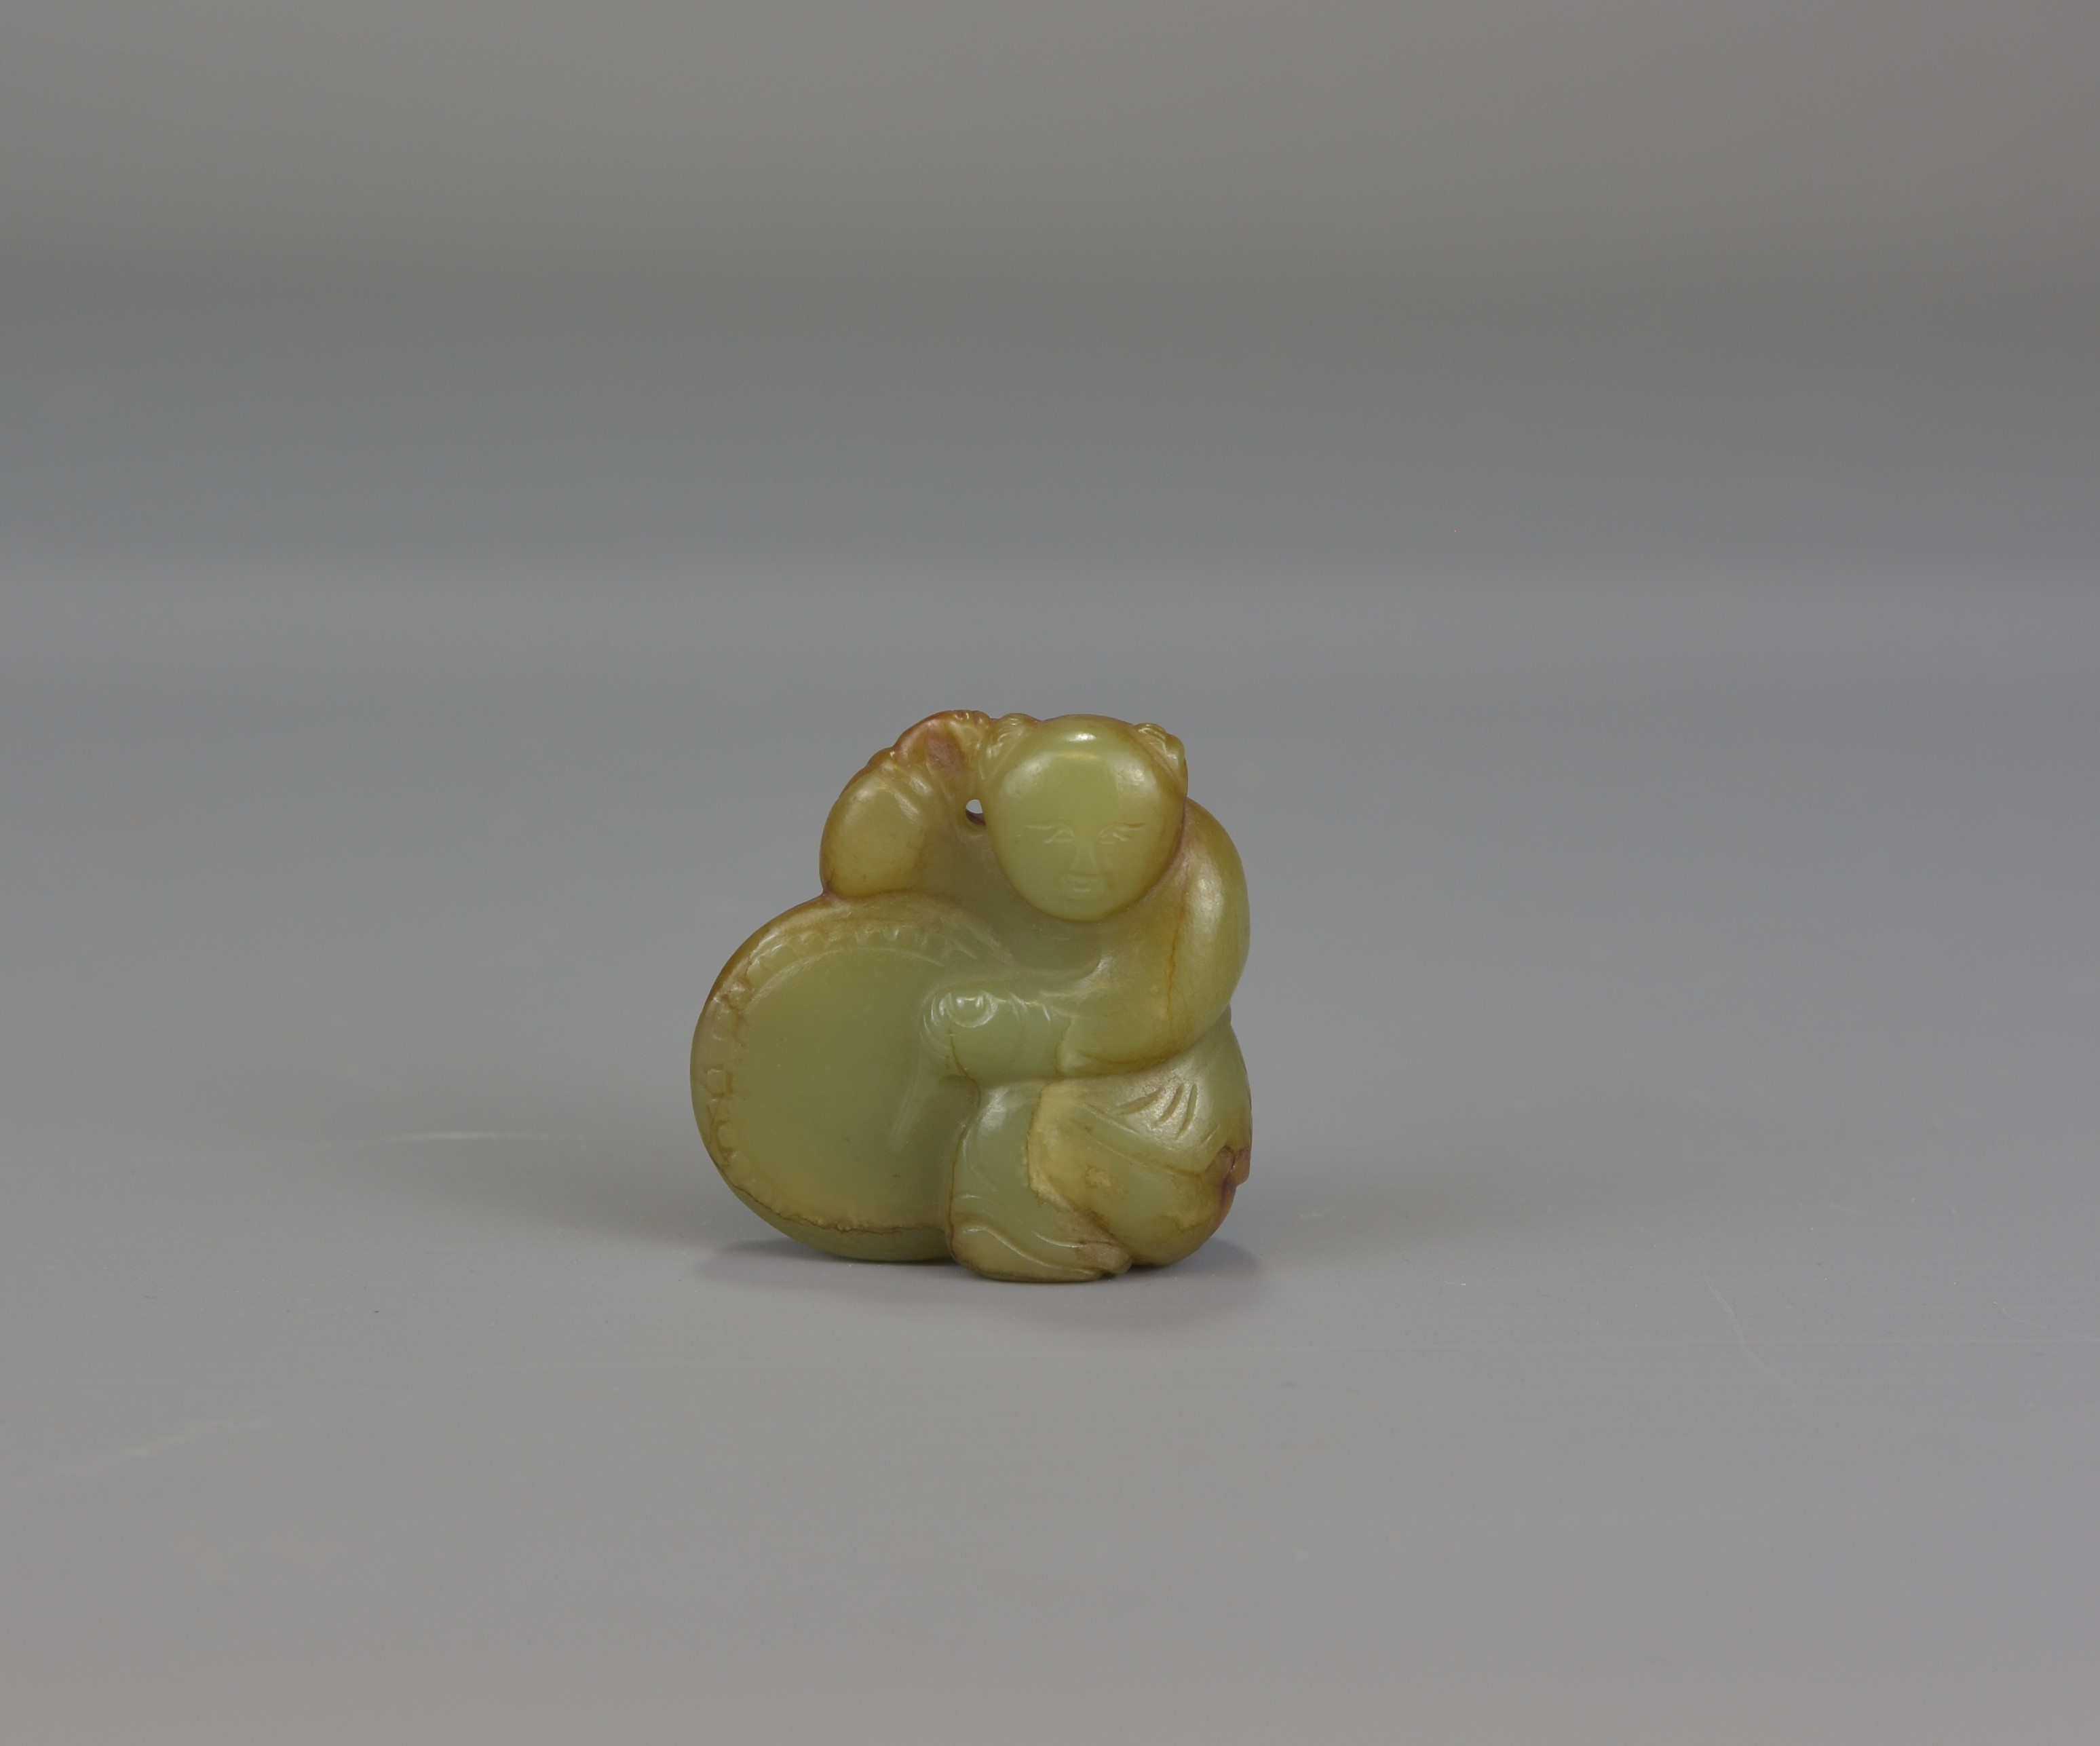 An 18th/19th century Chinese celadon Jade pendant